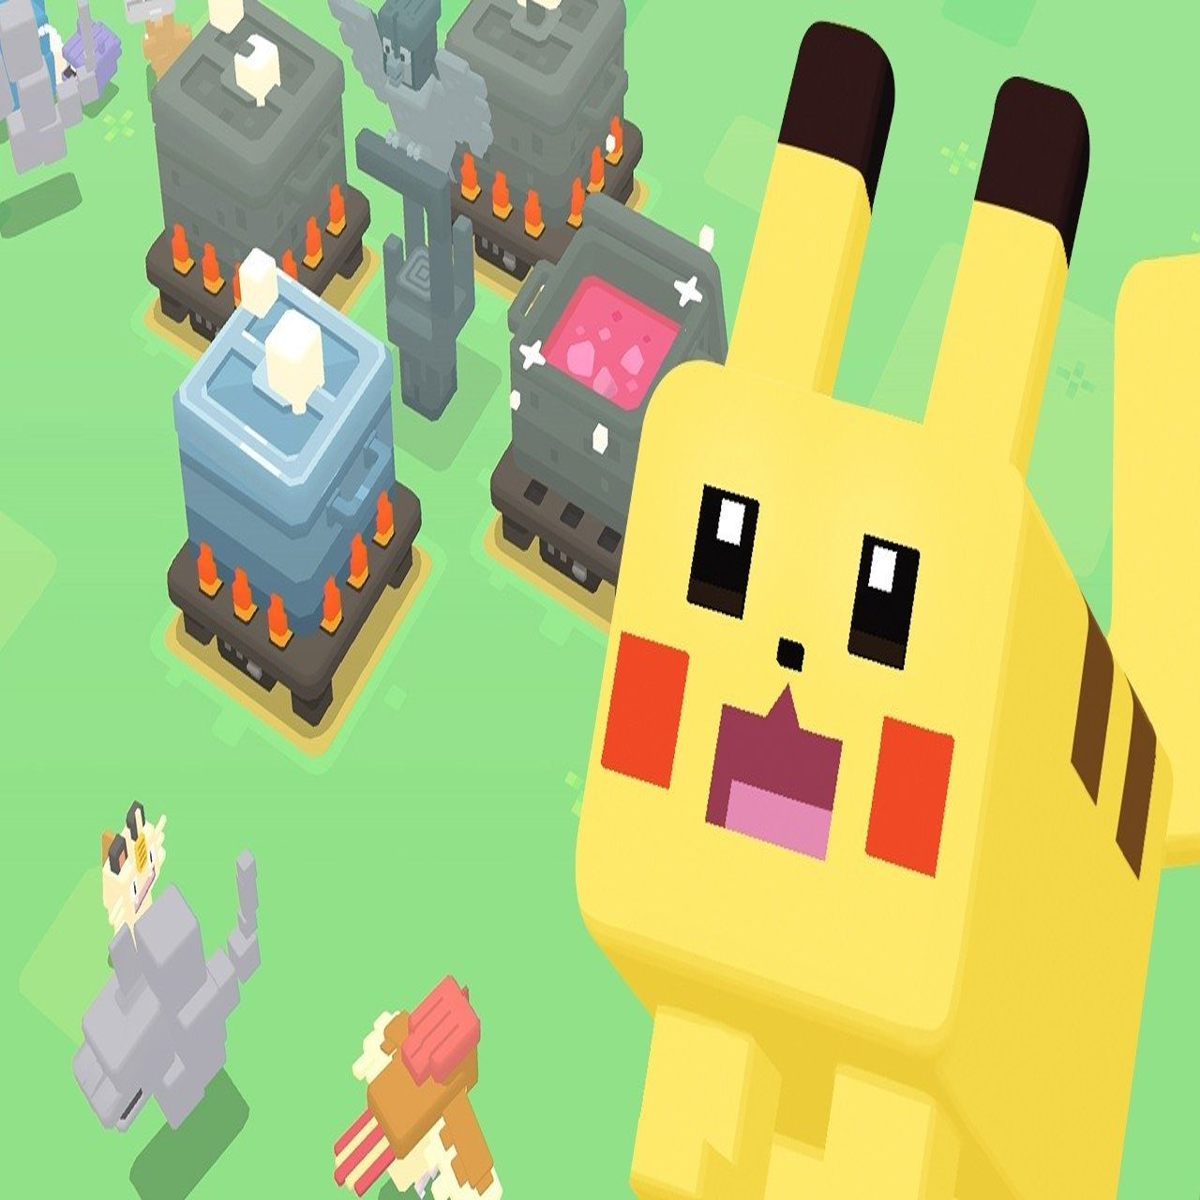 Pokémon' Comes To The Switch With 'Pokémon: Let's Go!' And 'Pokémon Quest